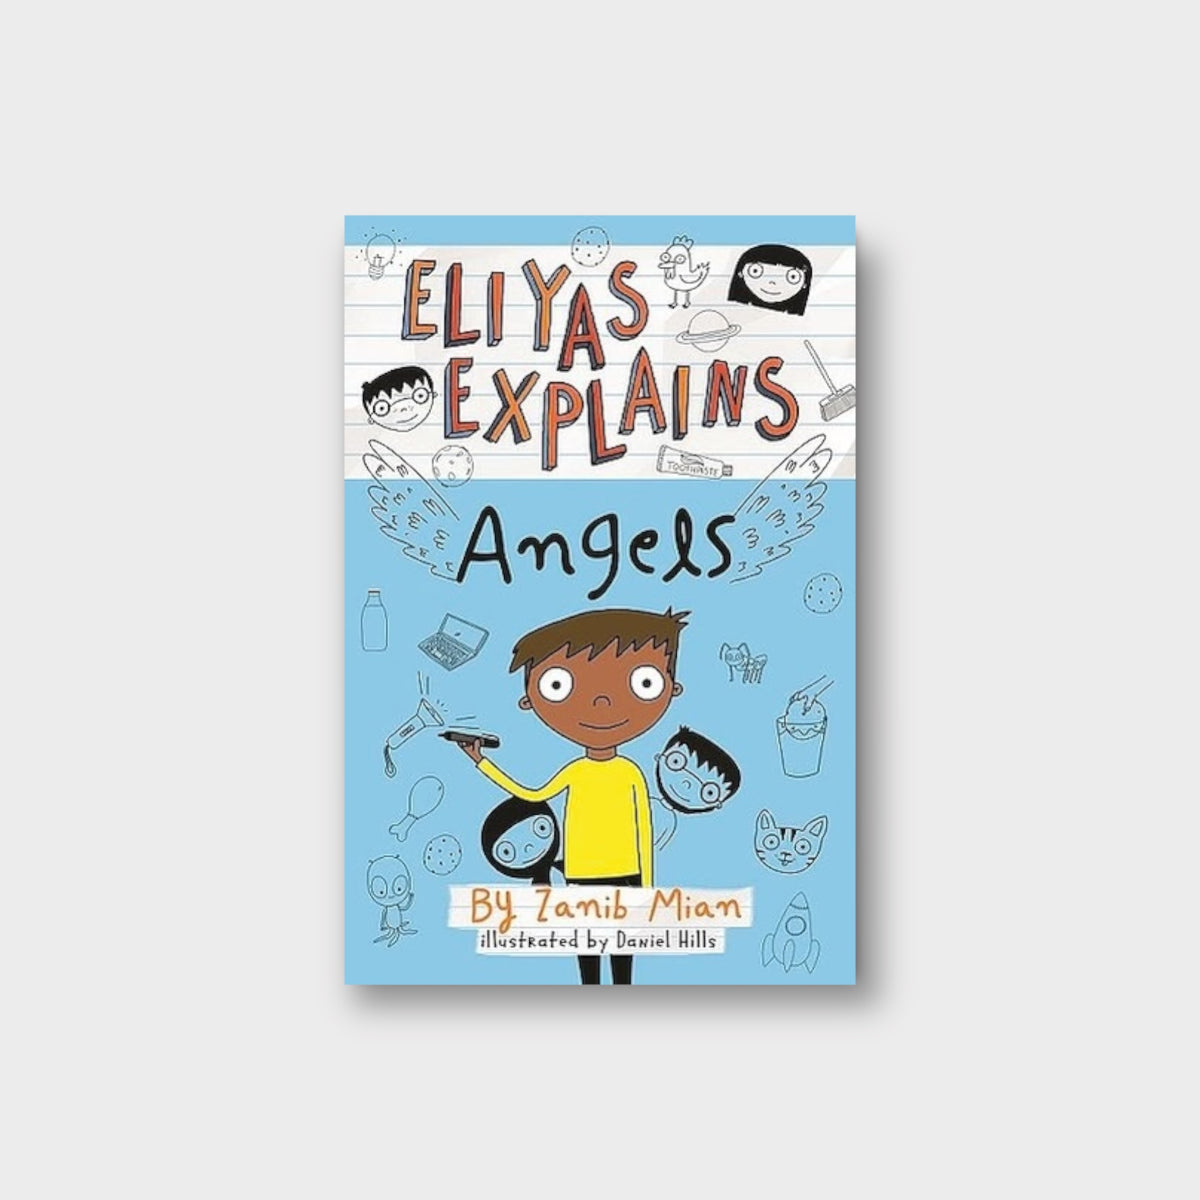 Eliyas Explain: Angels